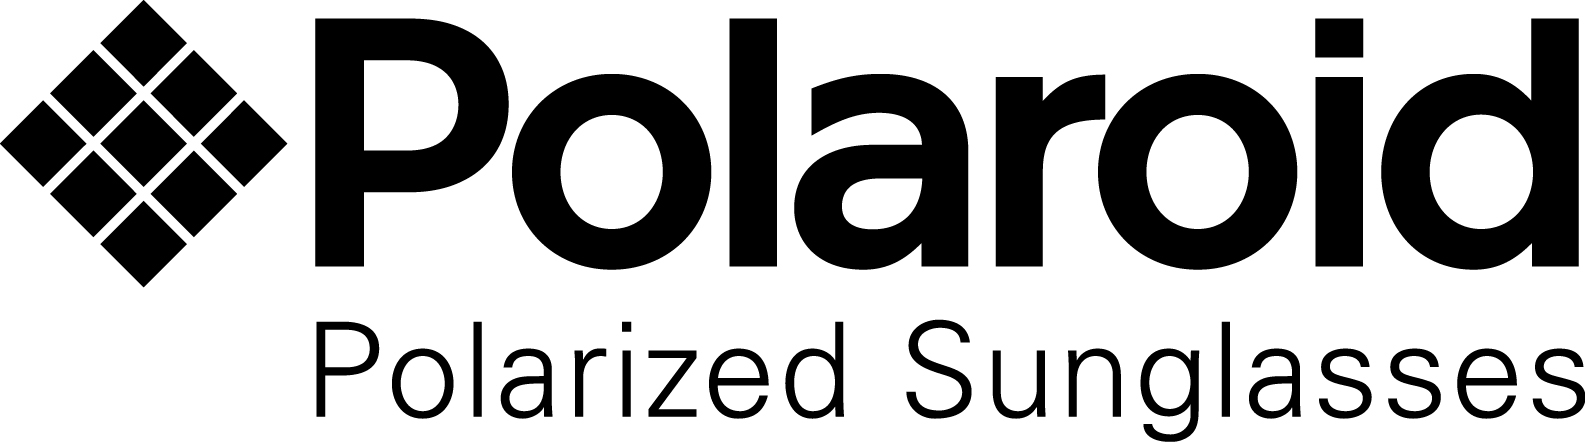 Polaroid_Sunglasses_logo.JPG